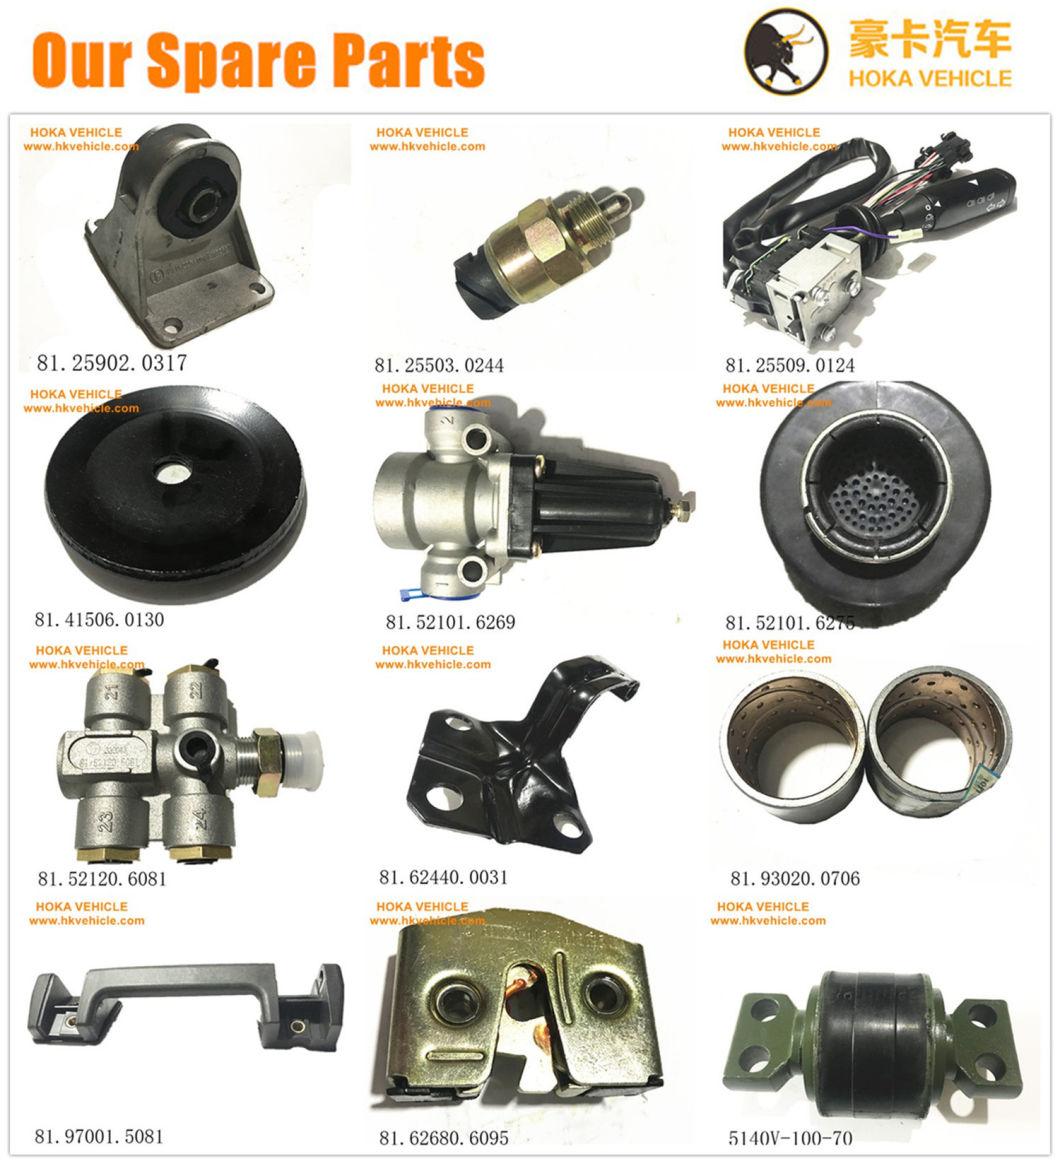 Original and Genuine Wheel Loader Spare Parts Boom Cylinder Seal Kit Xgyg01-050 for XCMG Wheel Loader